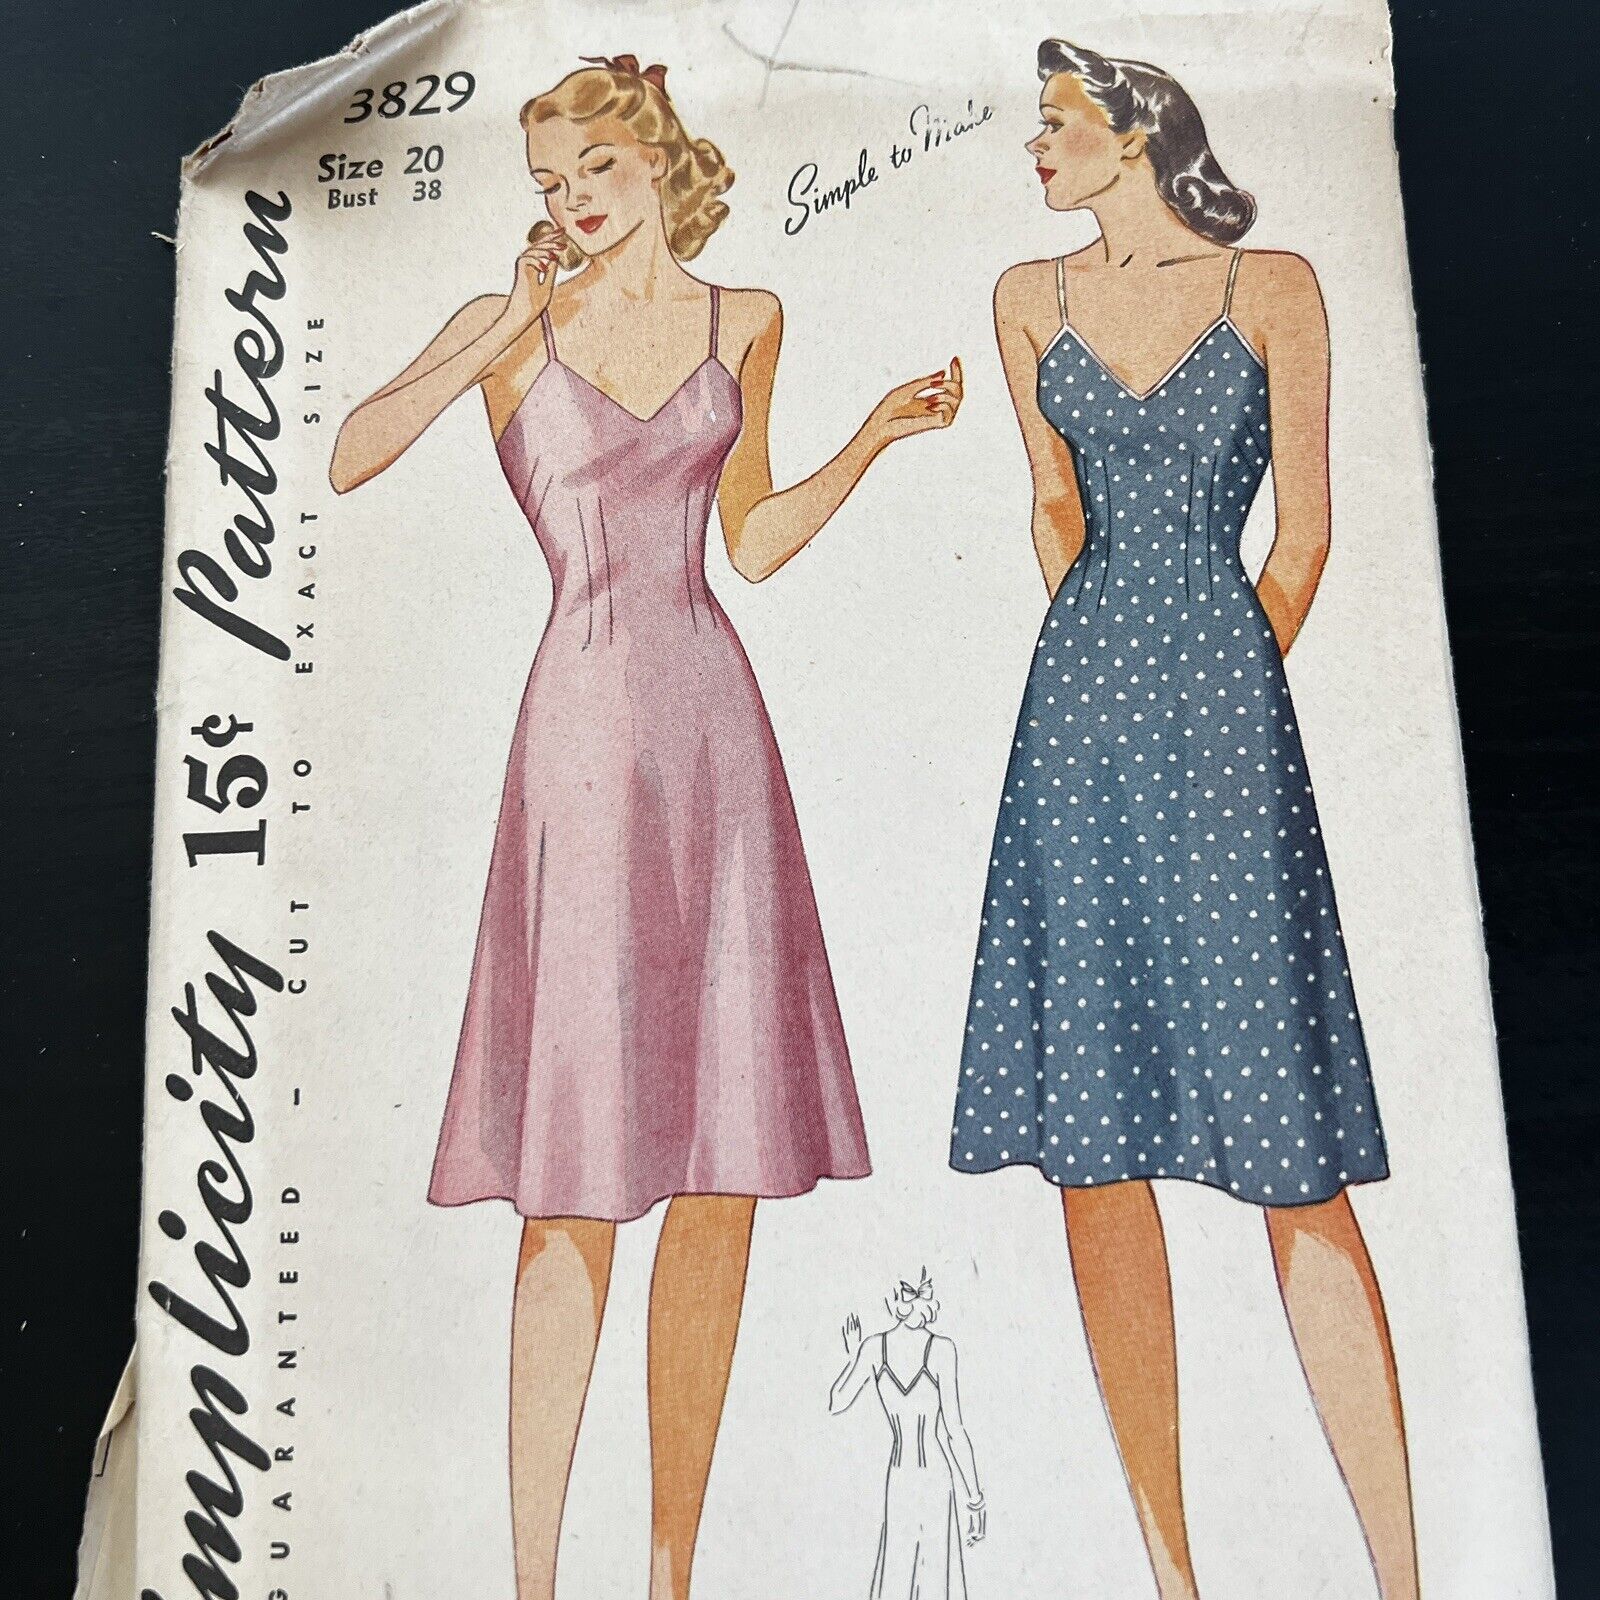 Vintage 1940s Simplicity 3829 Glam Pinup Bias Slip Sewing Pattern 20 M/L USED